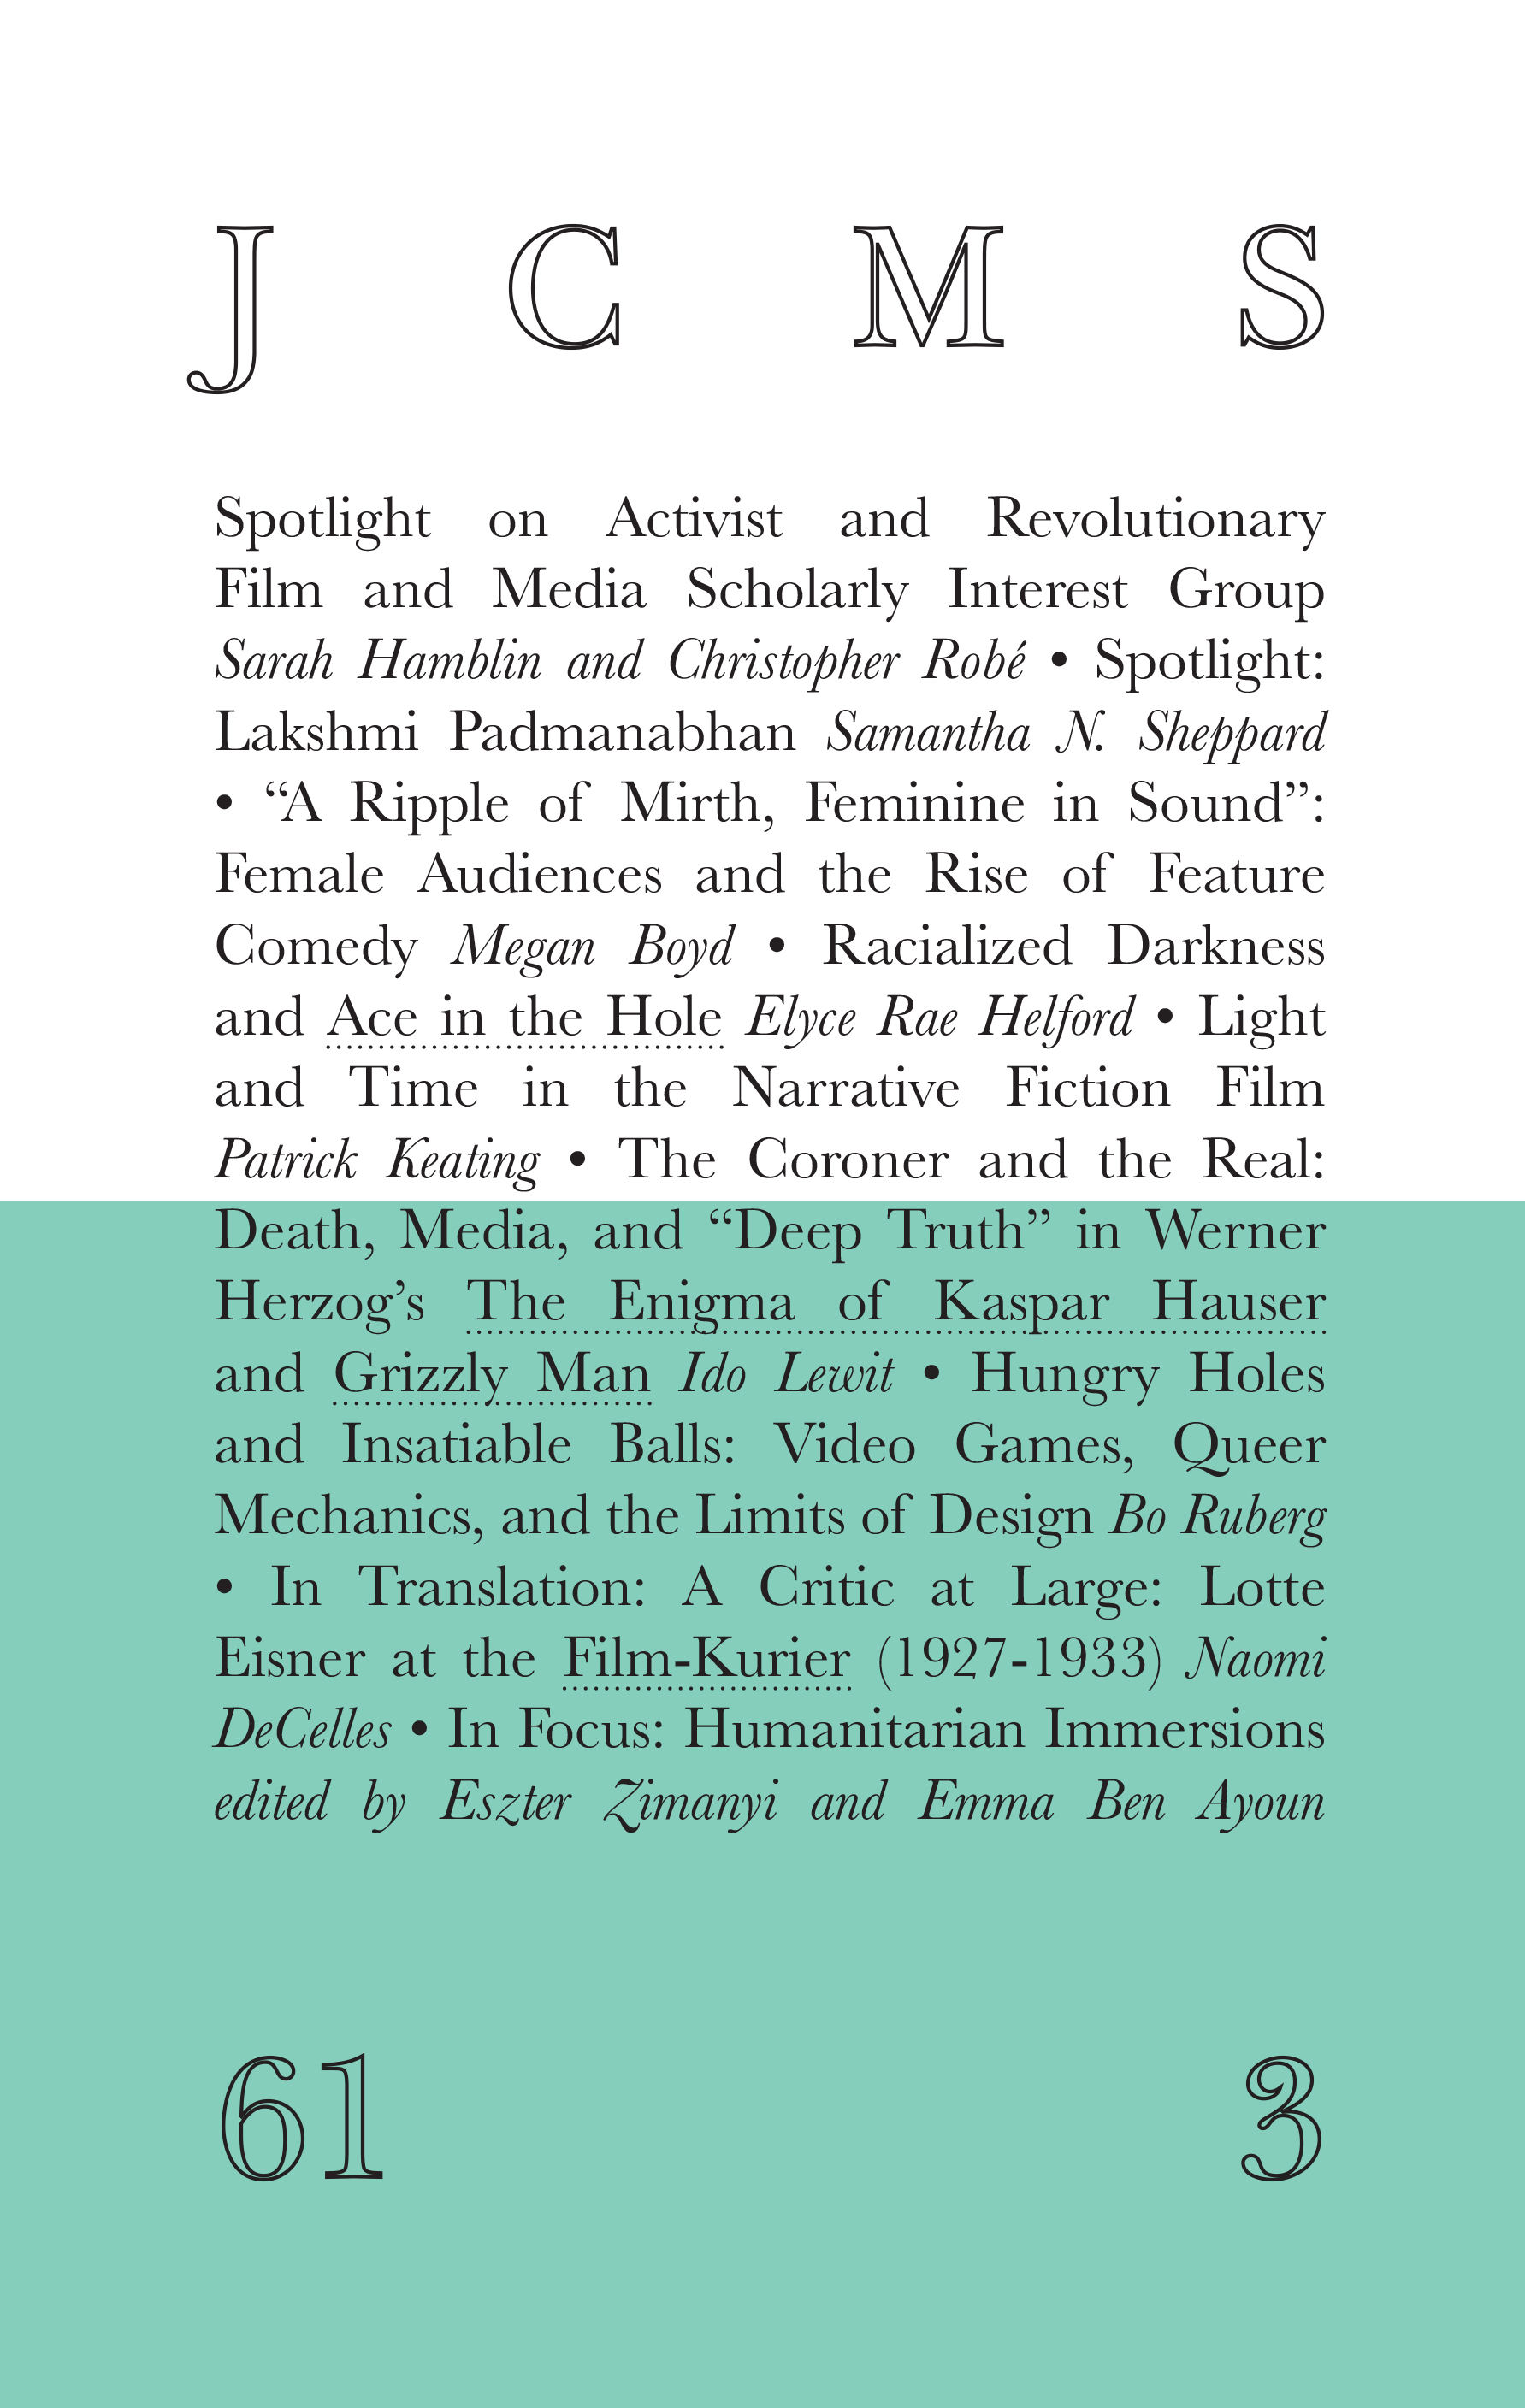 Journal of Cinema and Media Studies, vol. 61, no. 3